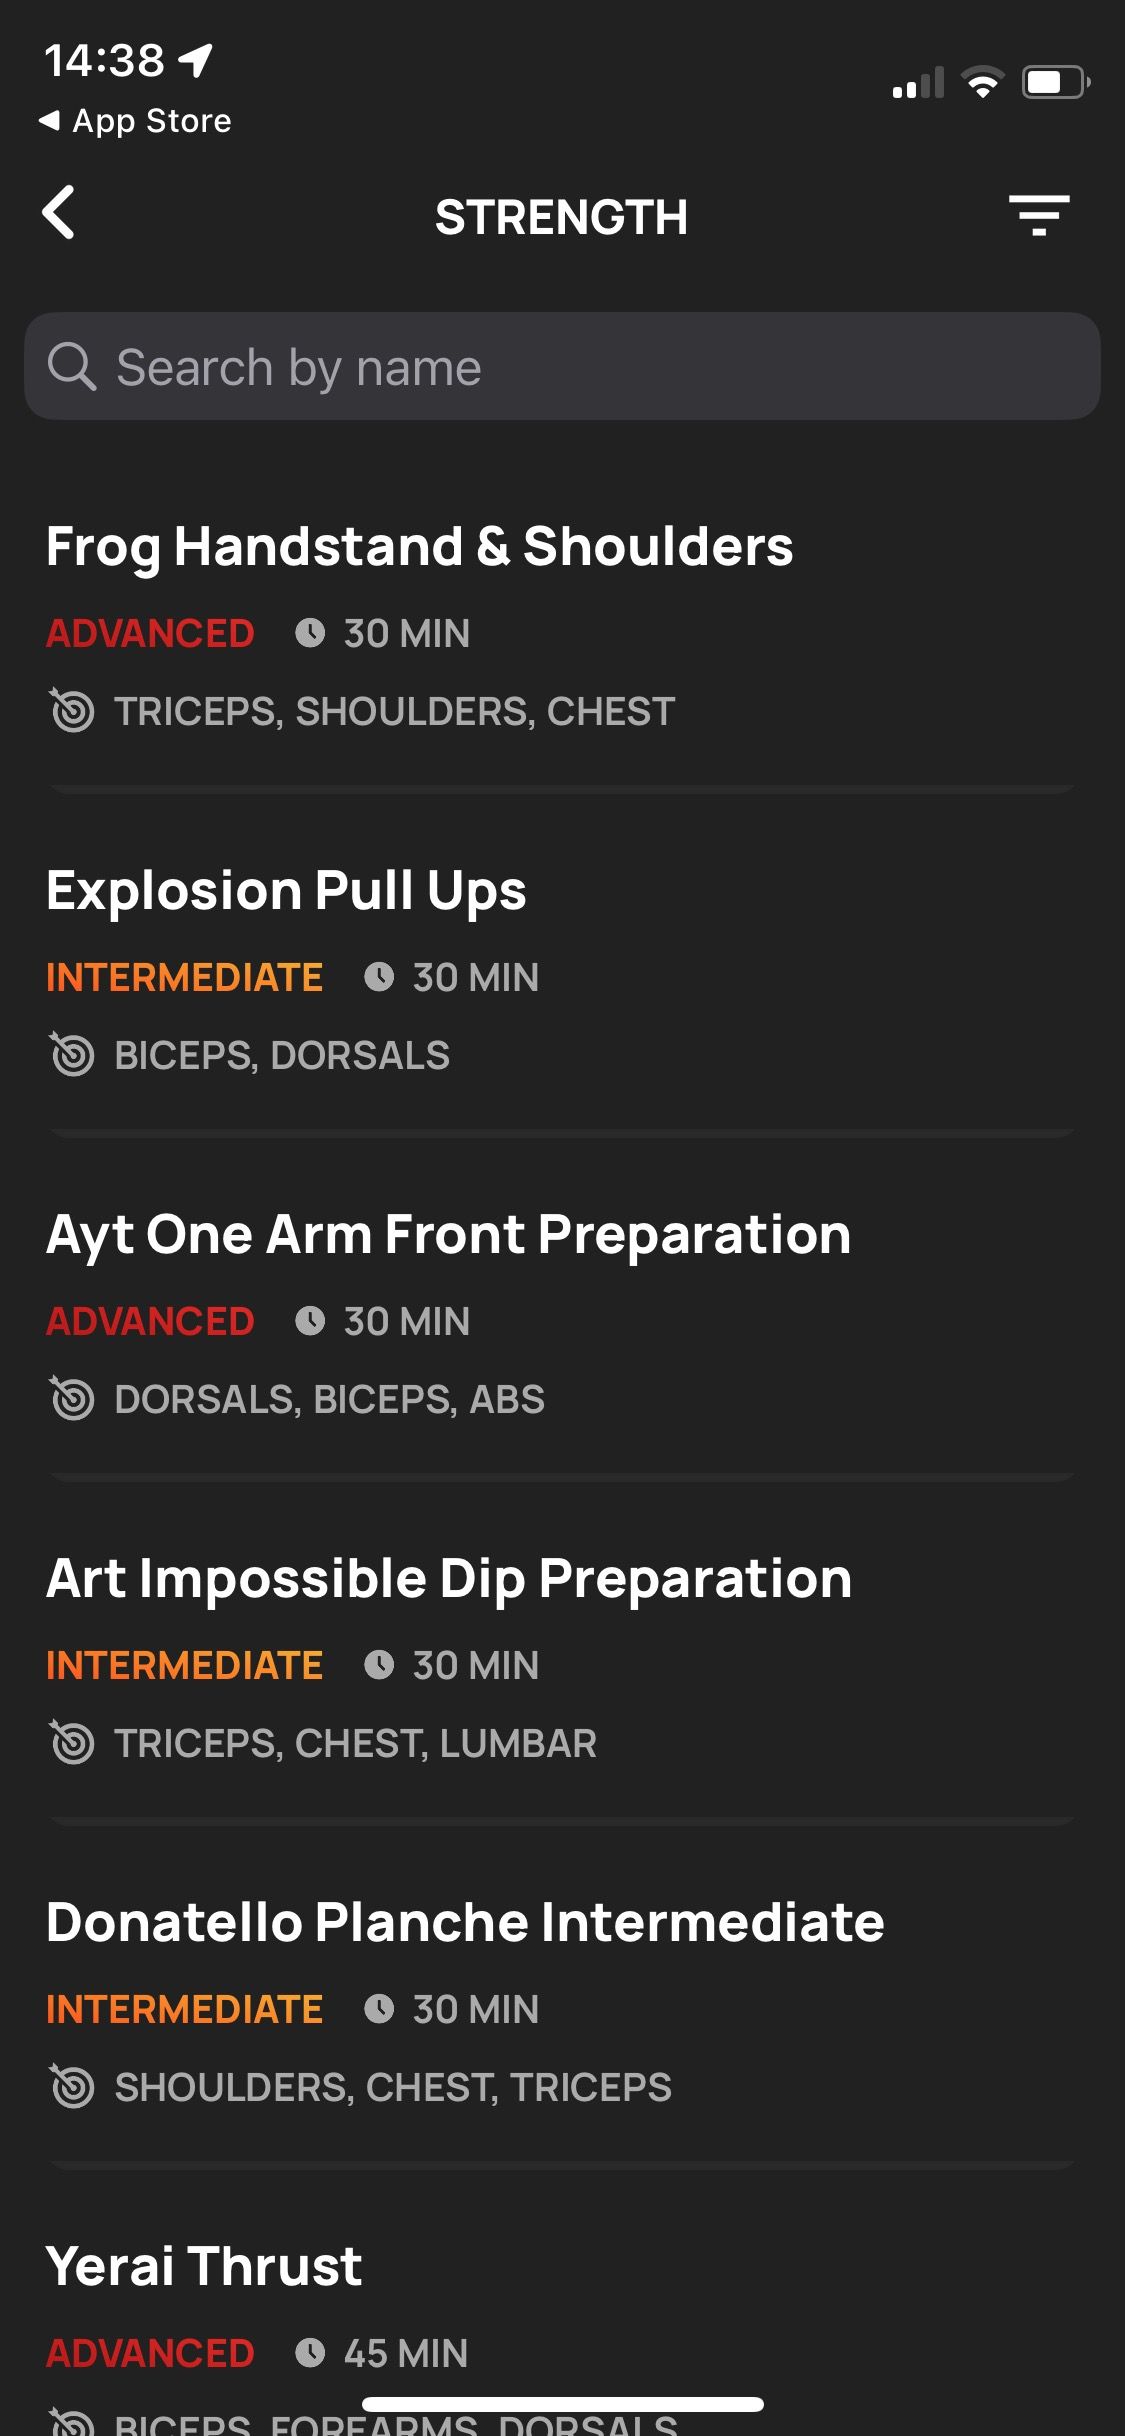 Screenshot of Calisteniapp app showing strength training workouts